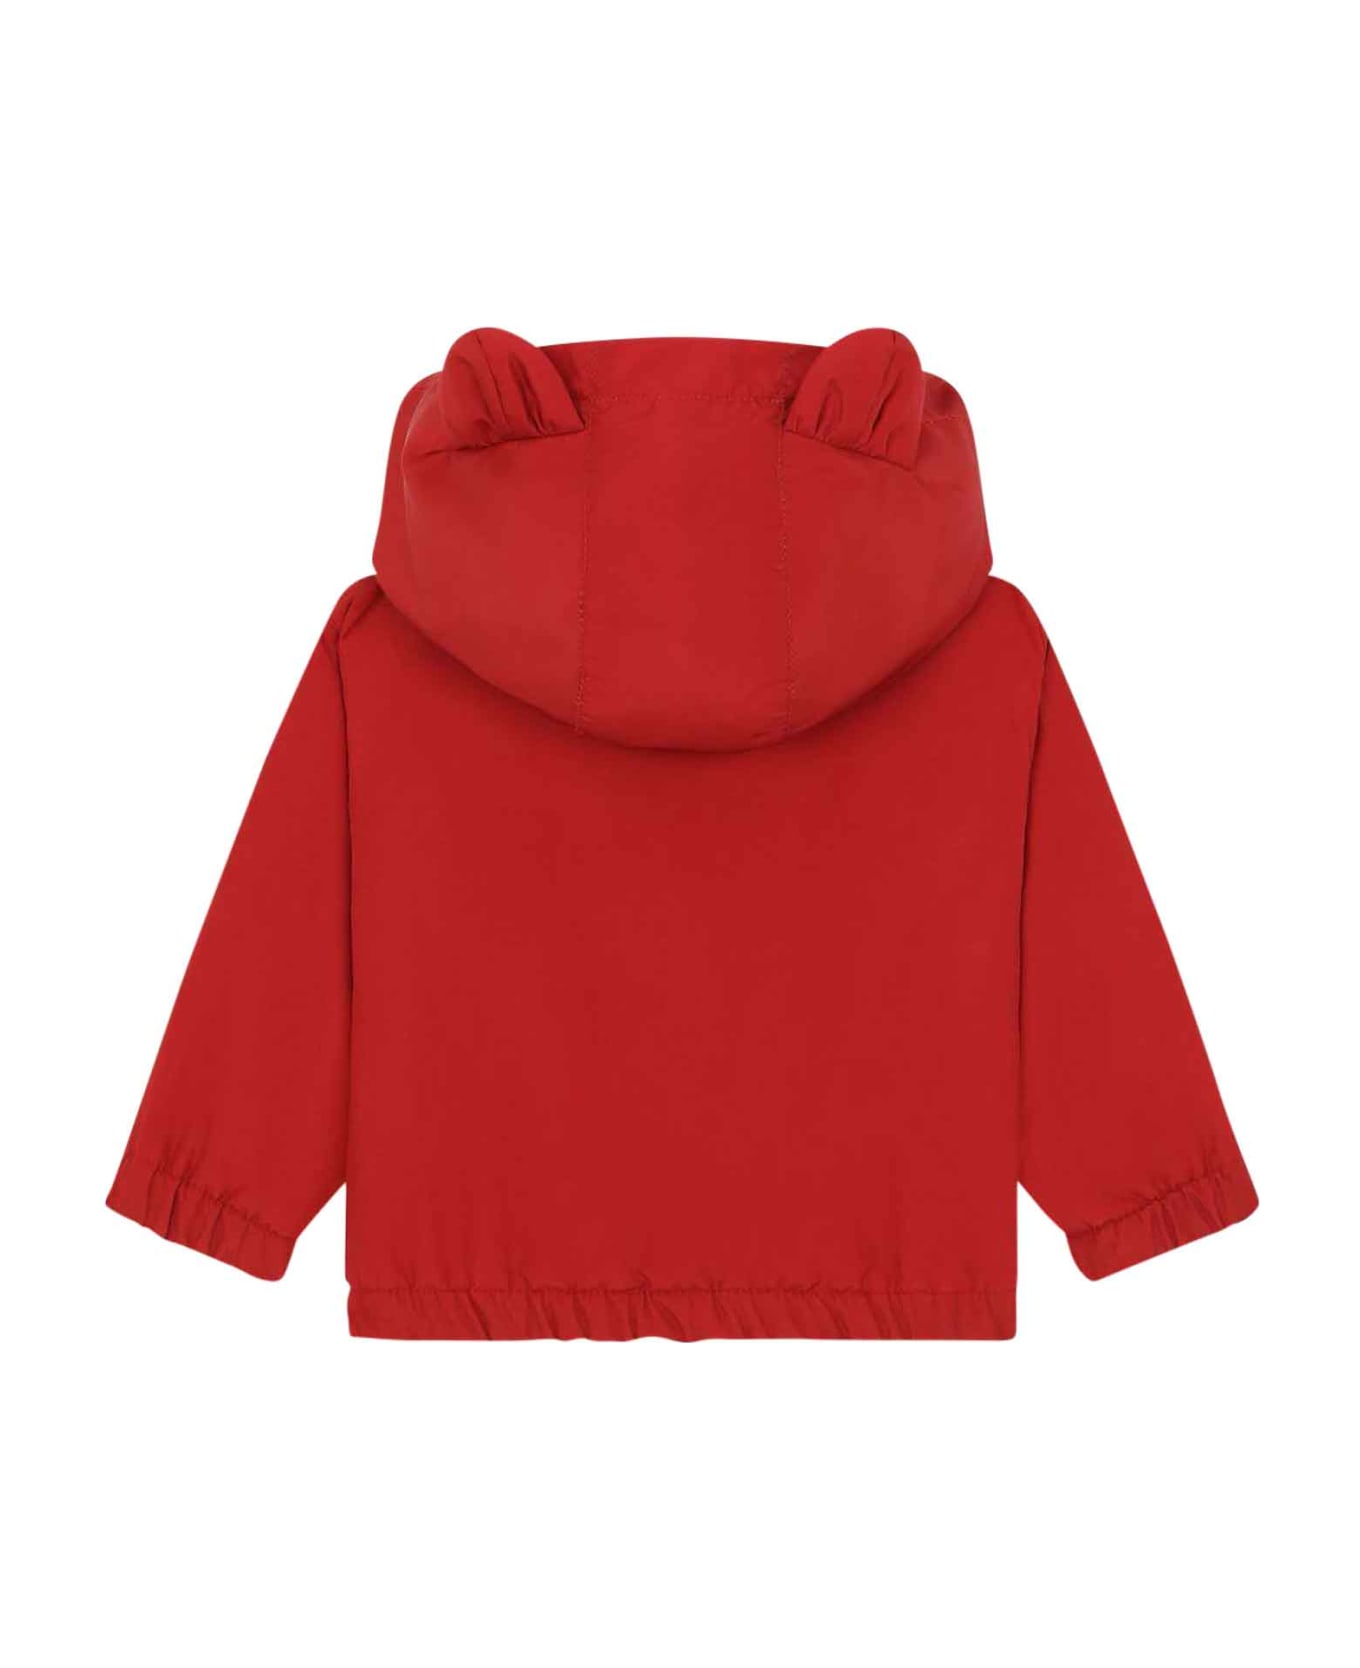 Dolce & Gabbana Red Newborn Sweatshirt - Leopardato